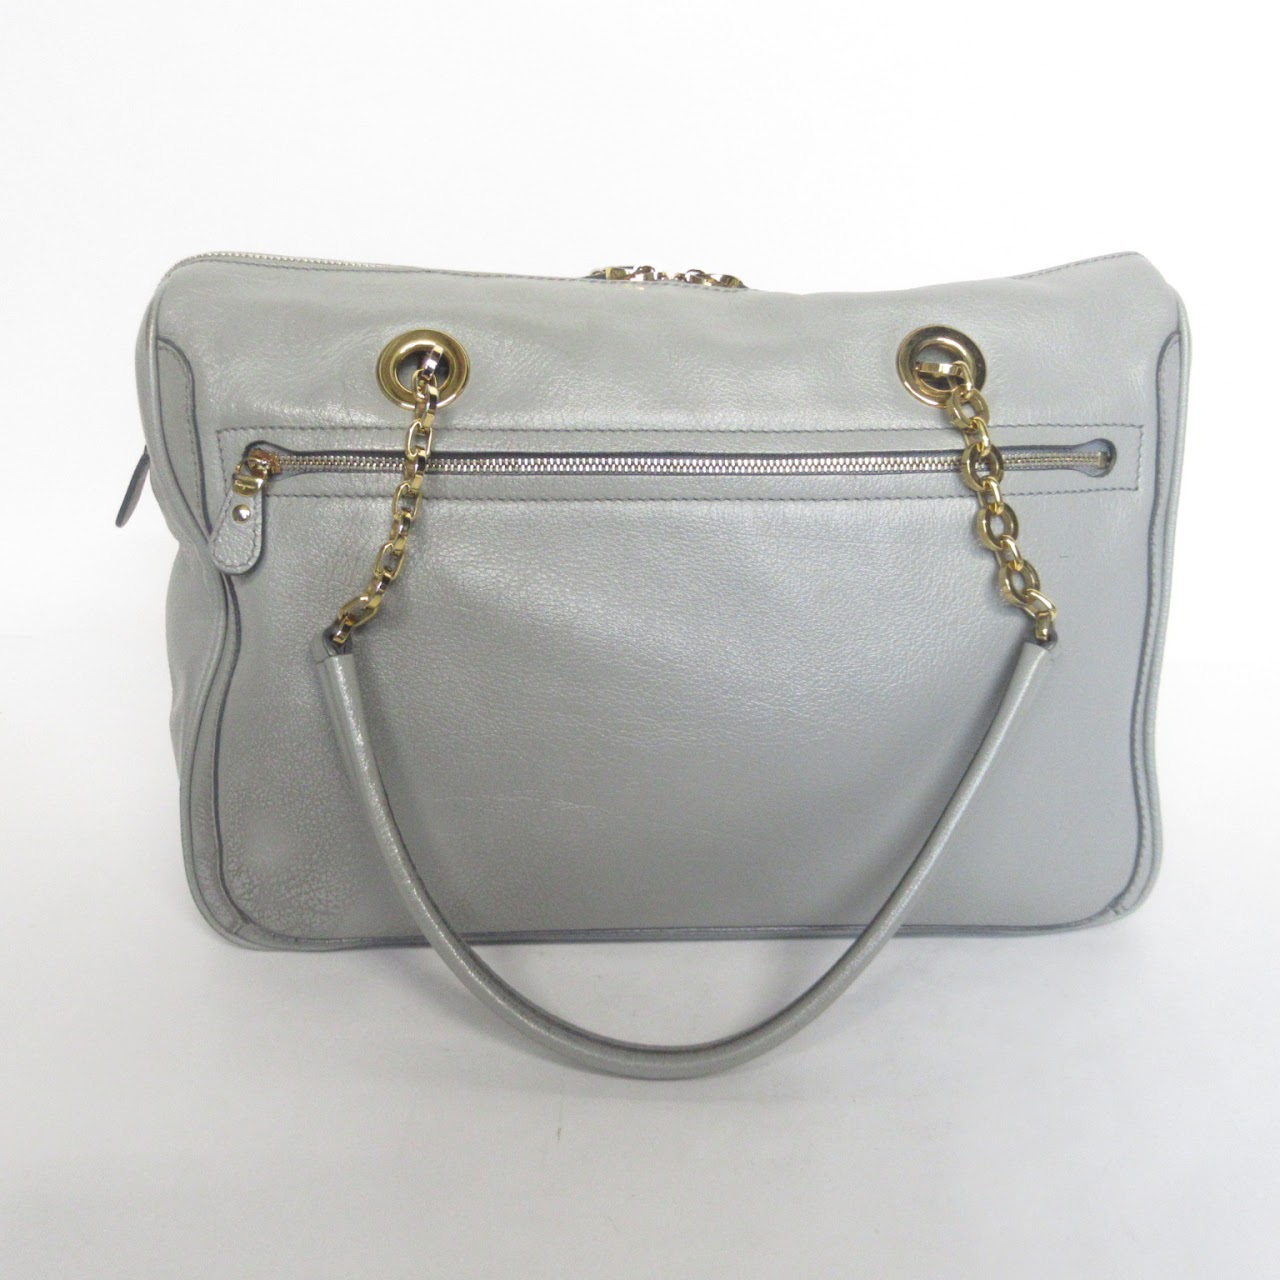 Salvatore Ferragamo Grey & Golden Chain Handbag